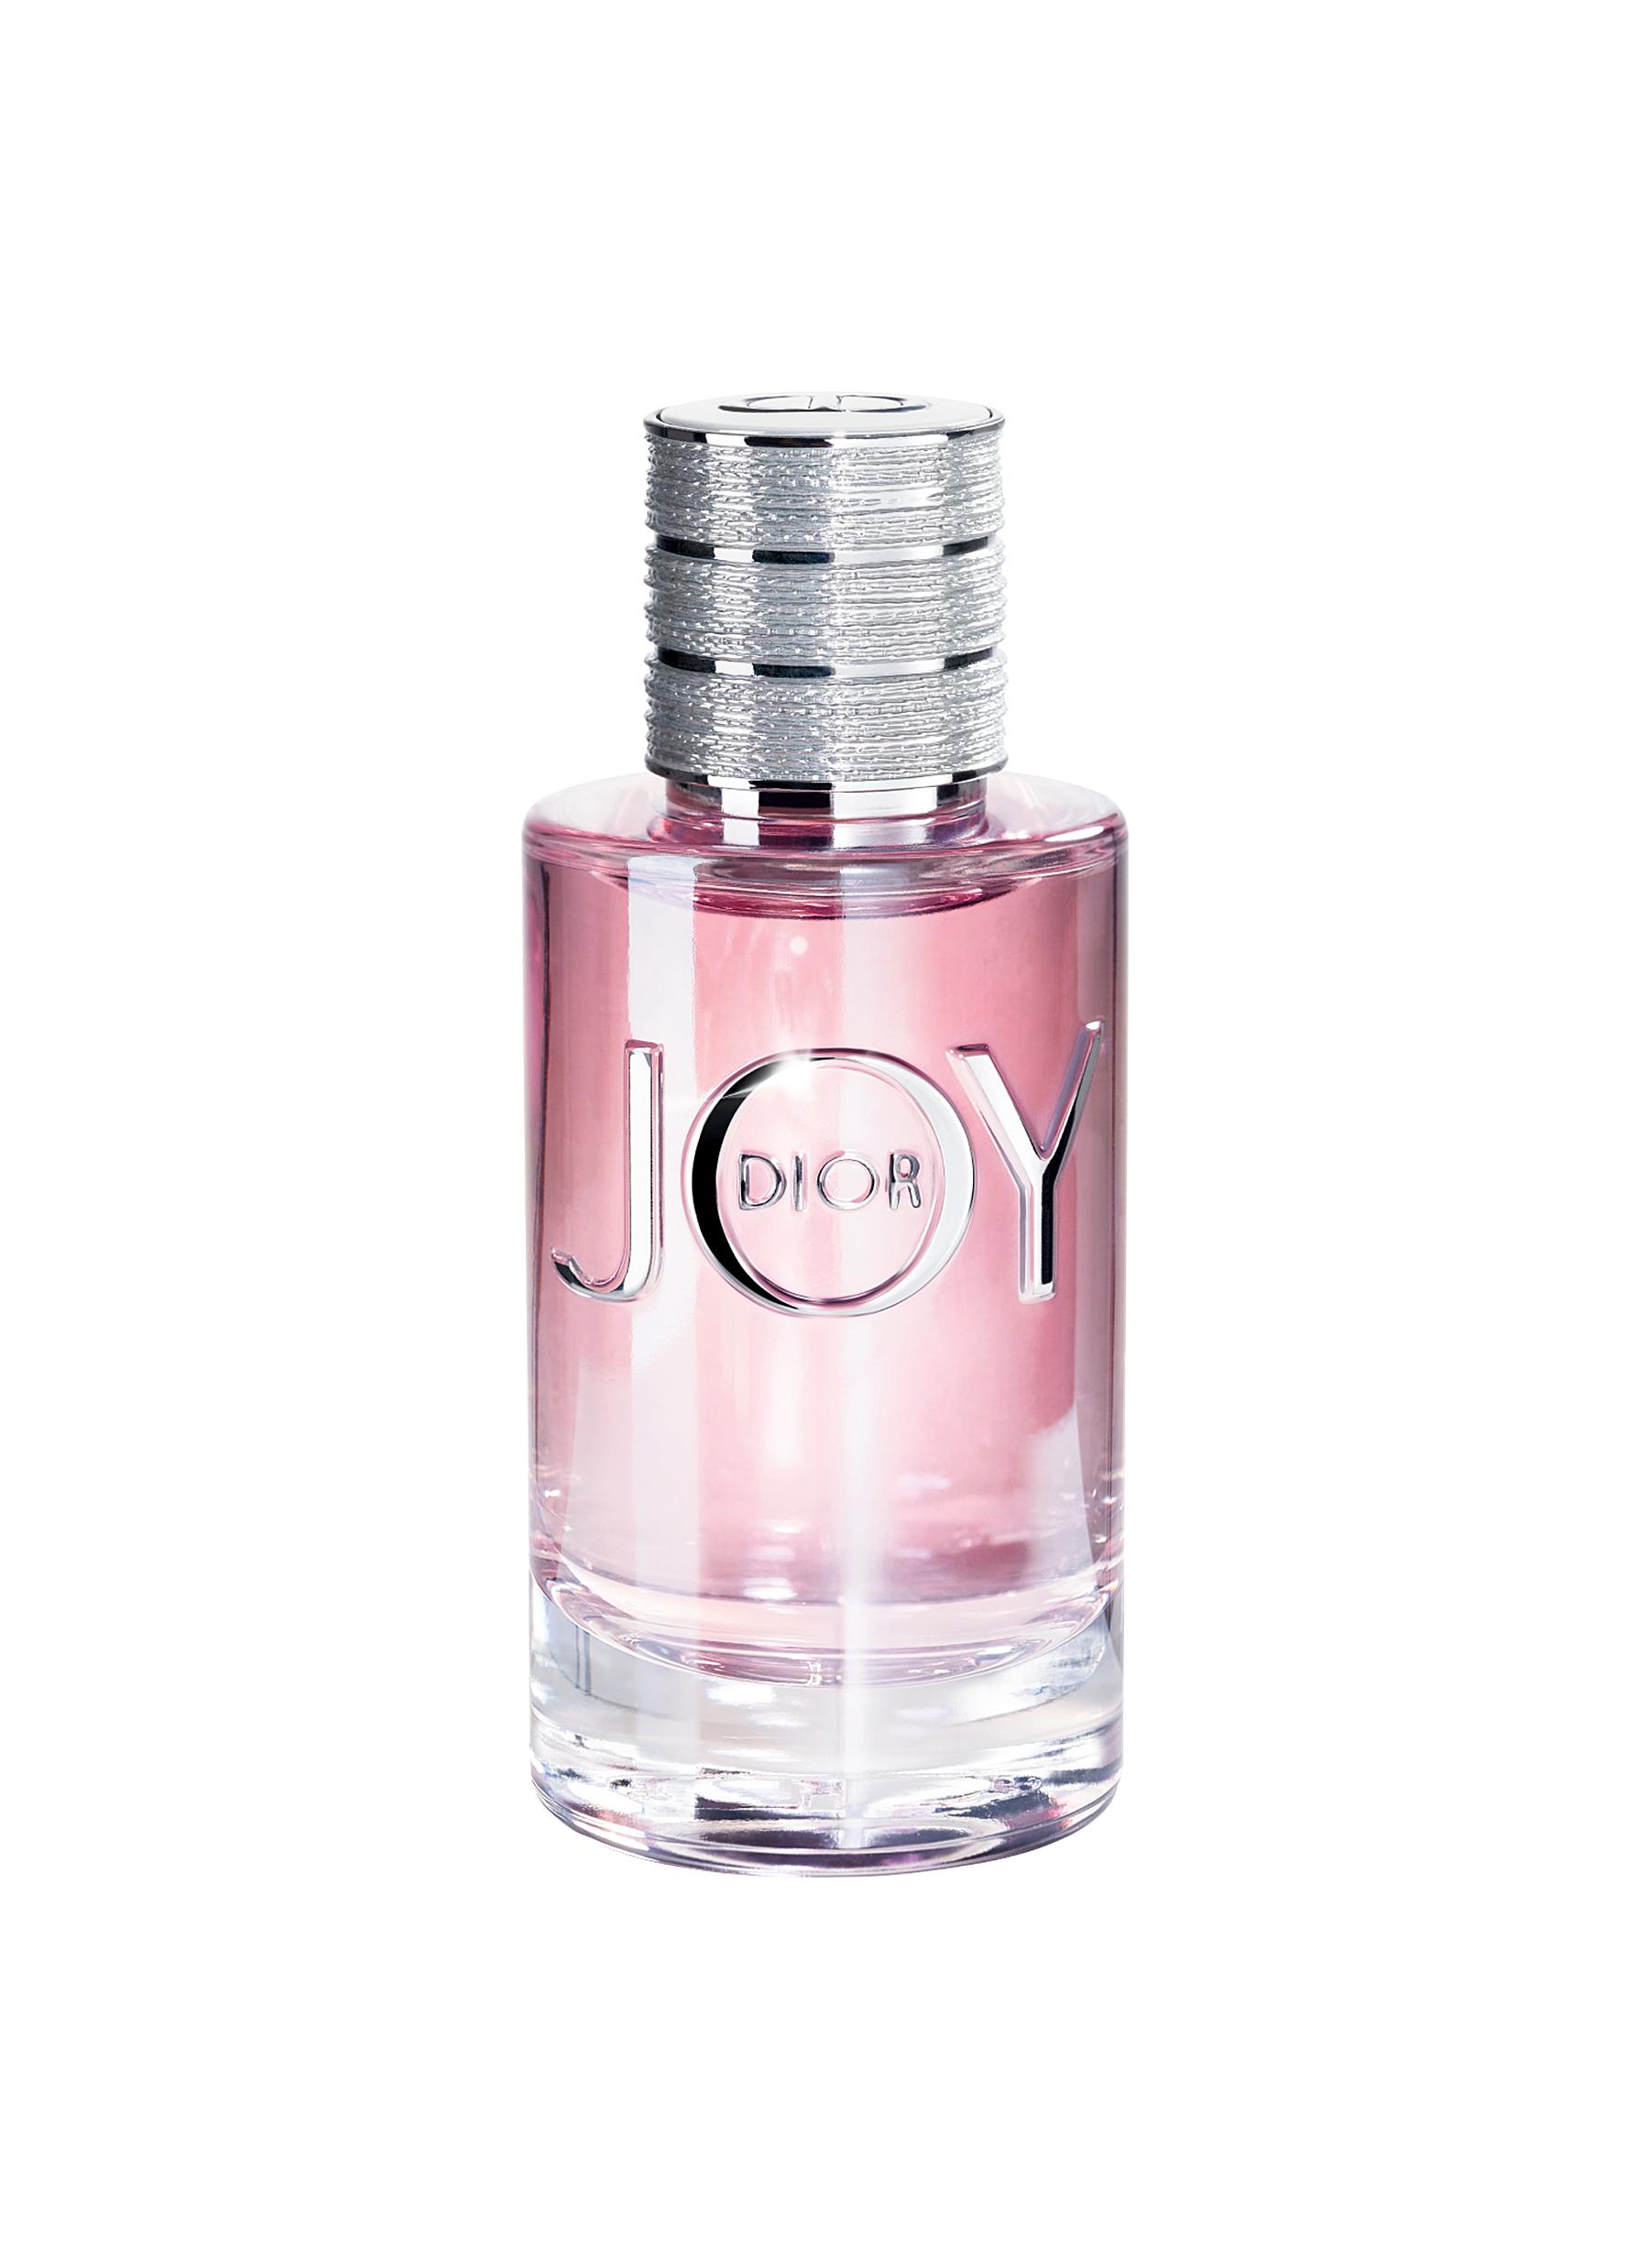 DIOR BEAUTY | JOY by Dior Eau de Parfum 